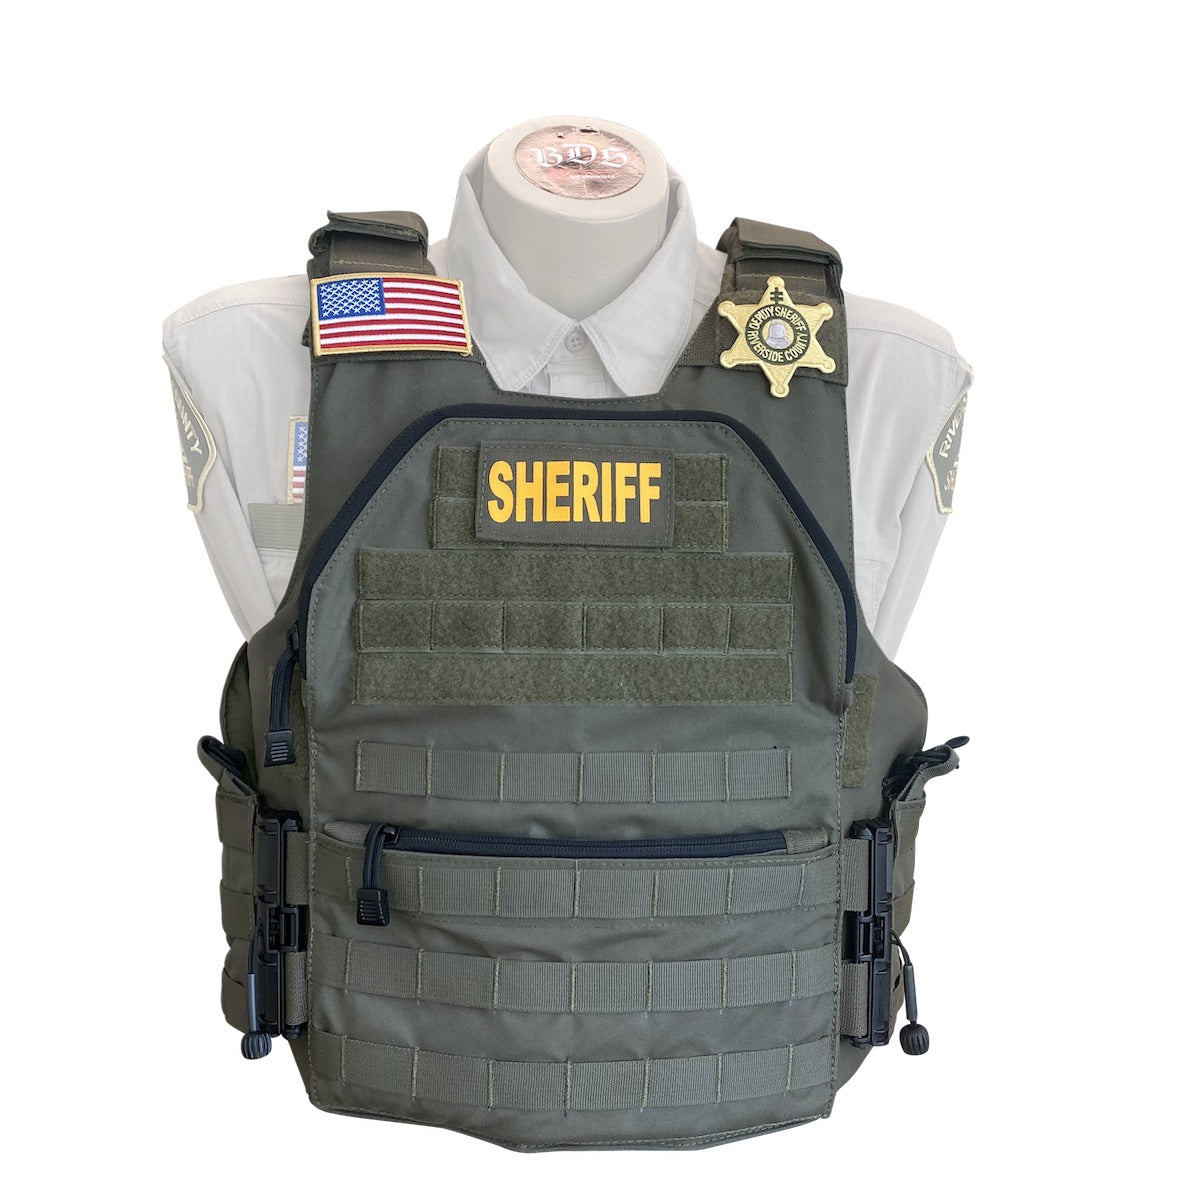 police bulletproof vest carriers